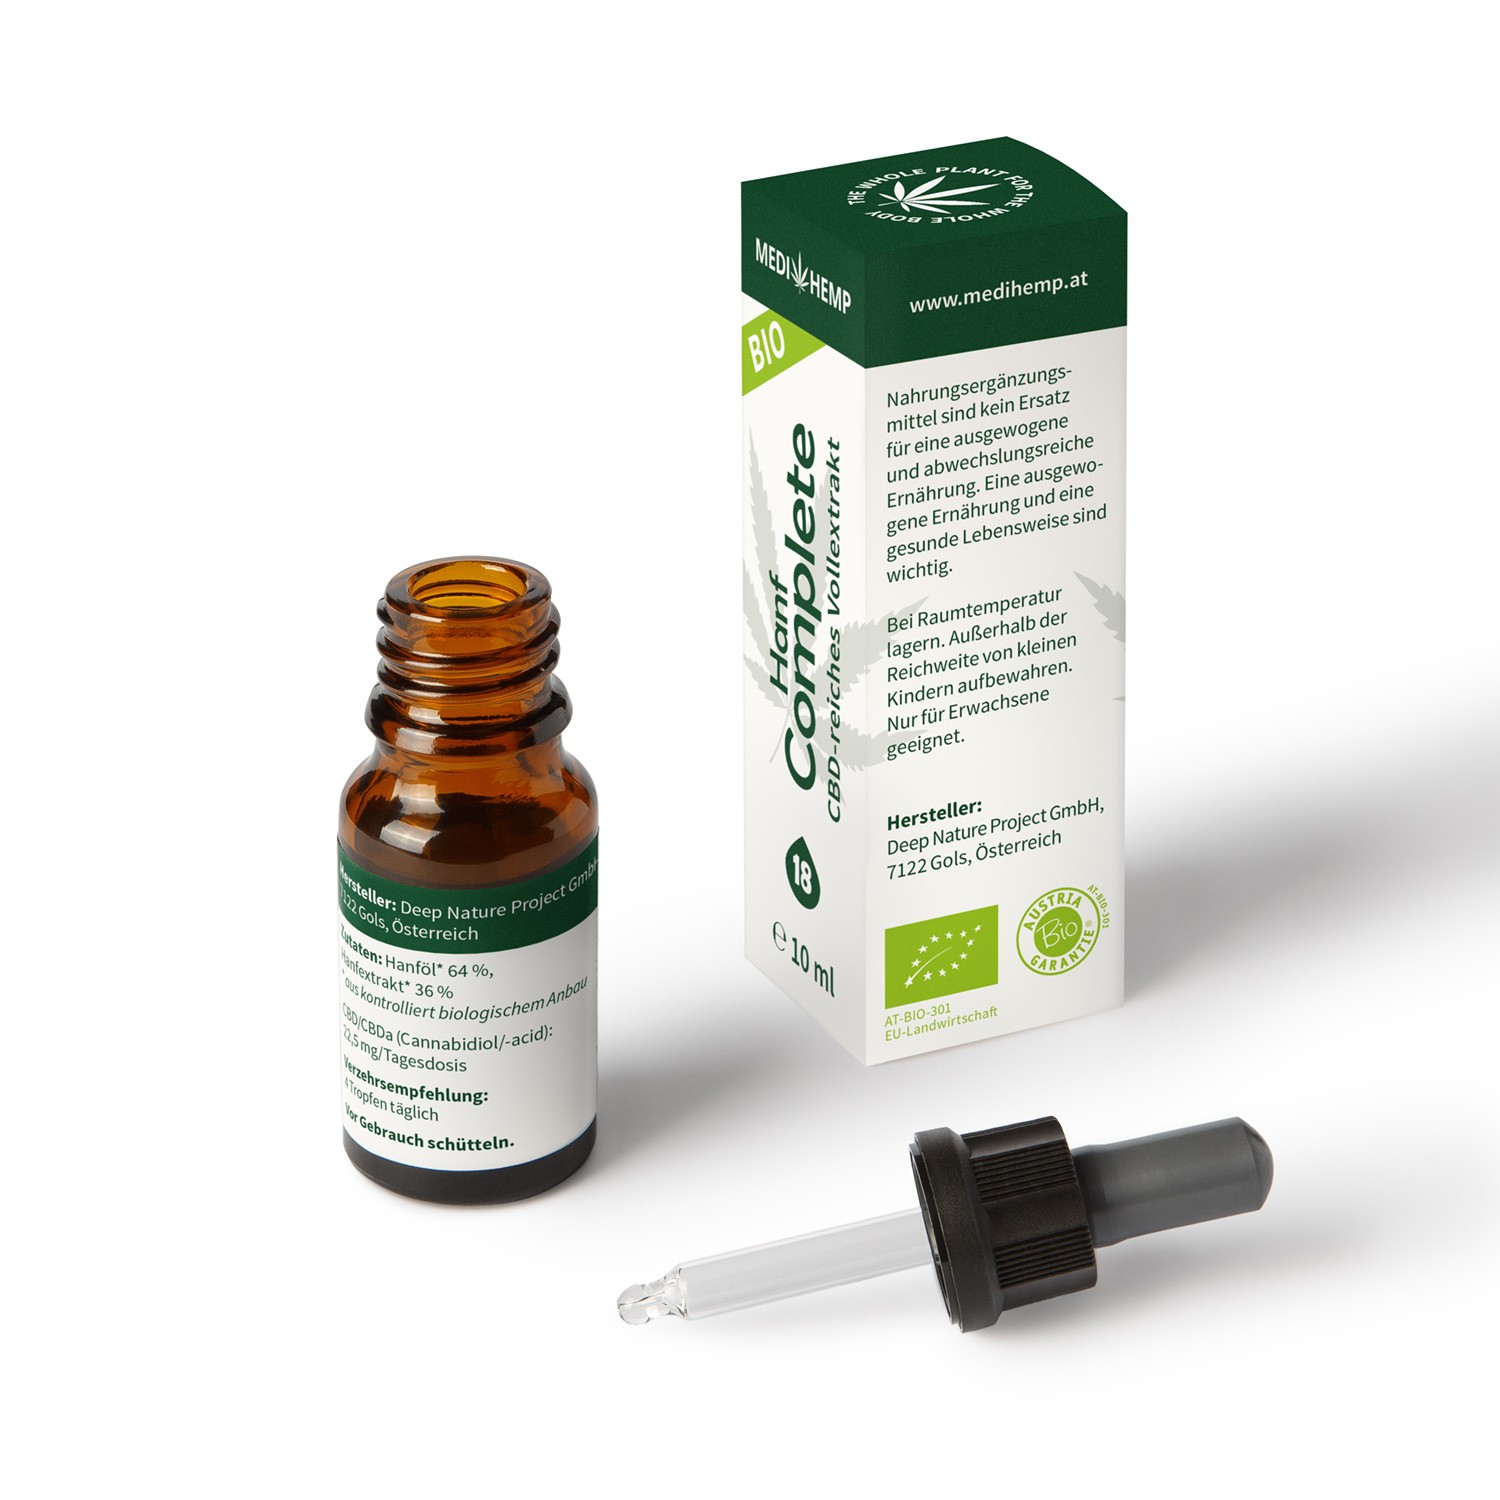 Medihemp Bio Hanf Complete Öl - 18 % - 10 ml - 1800 mg CBD Aroma Öl